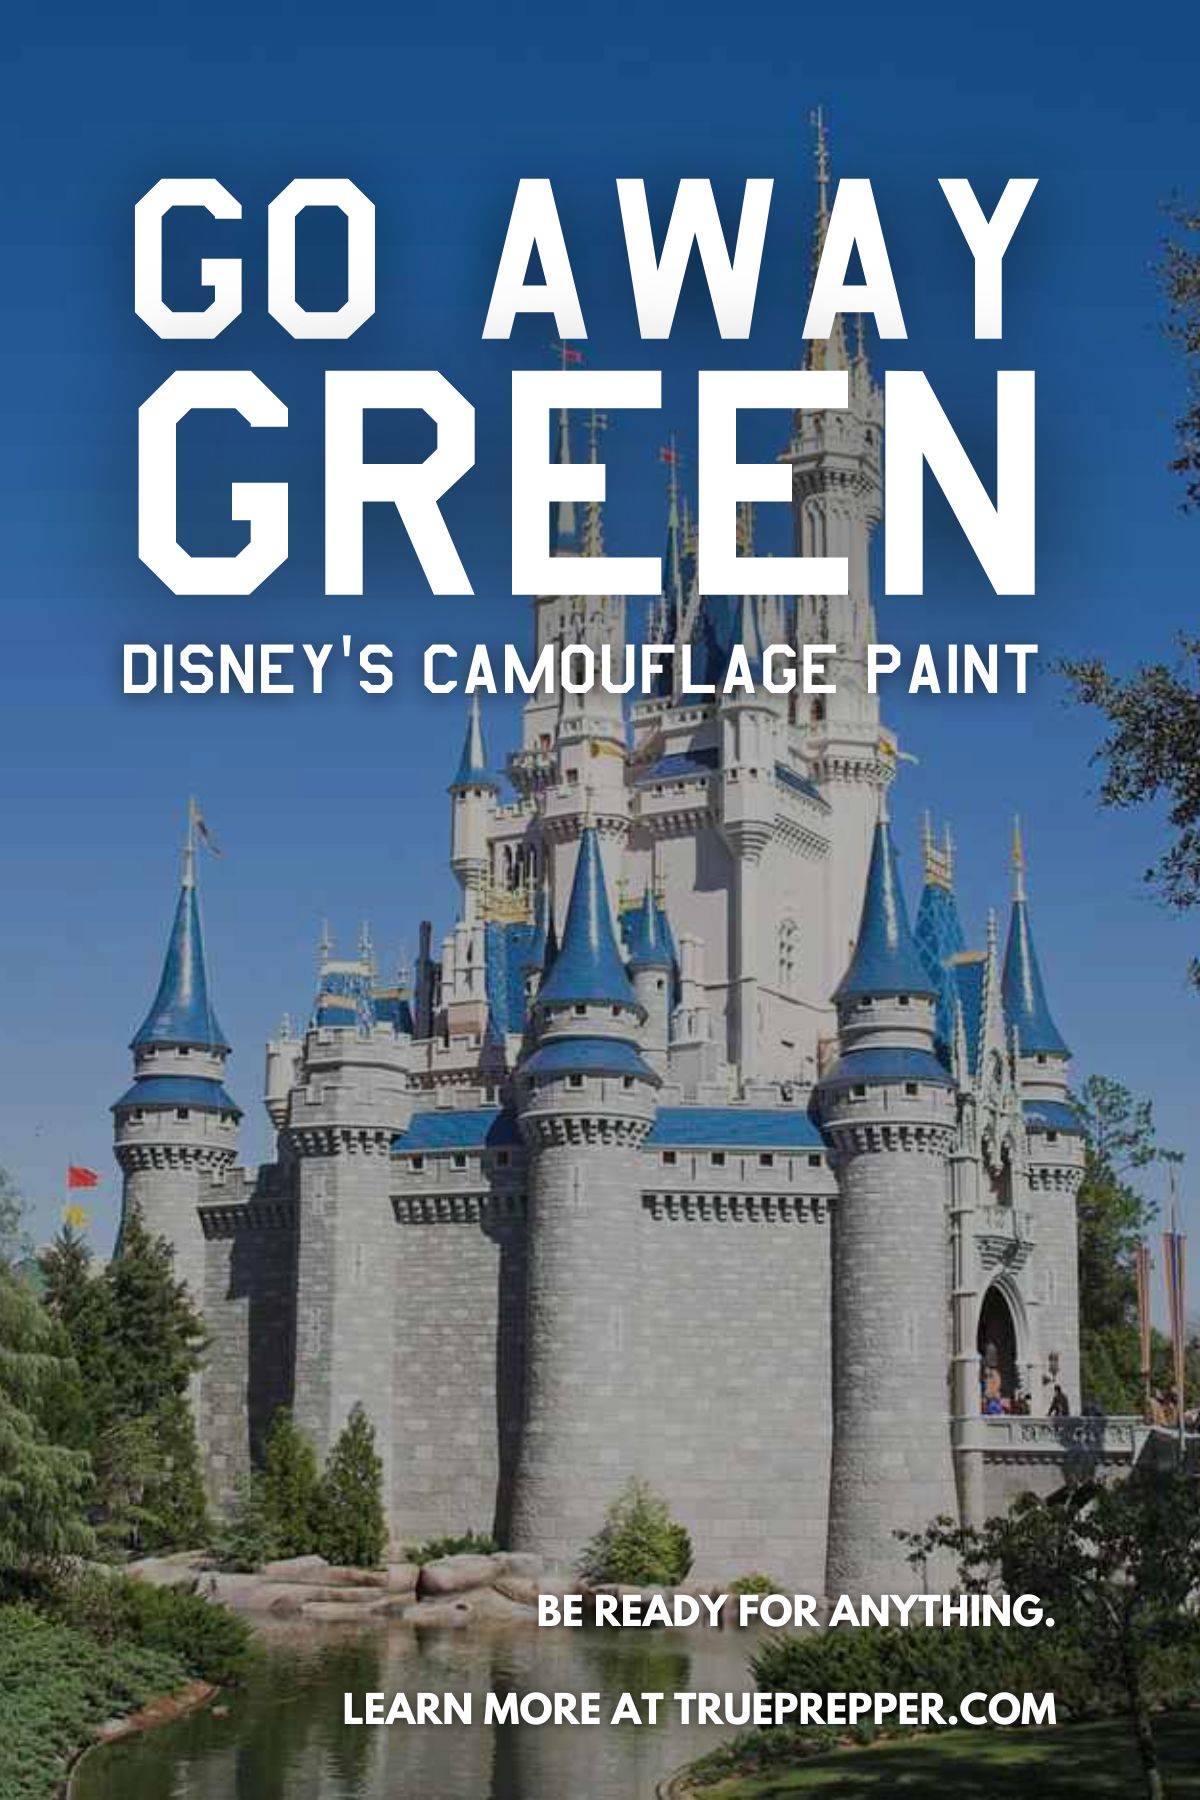 Go Away Green Disney's Camouflage Paint